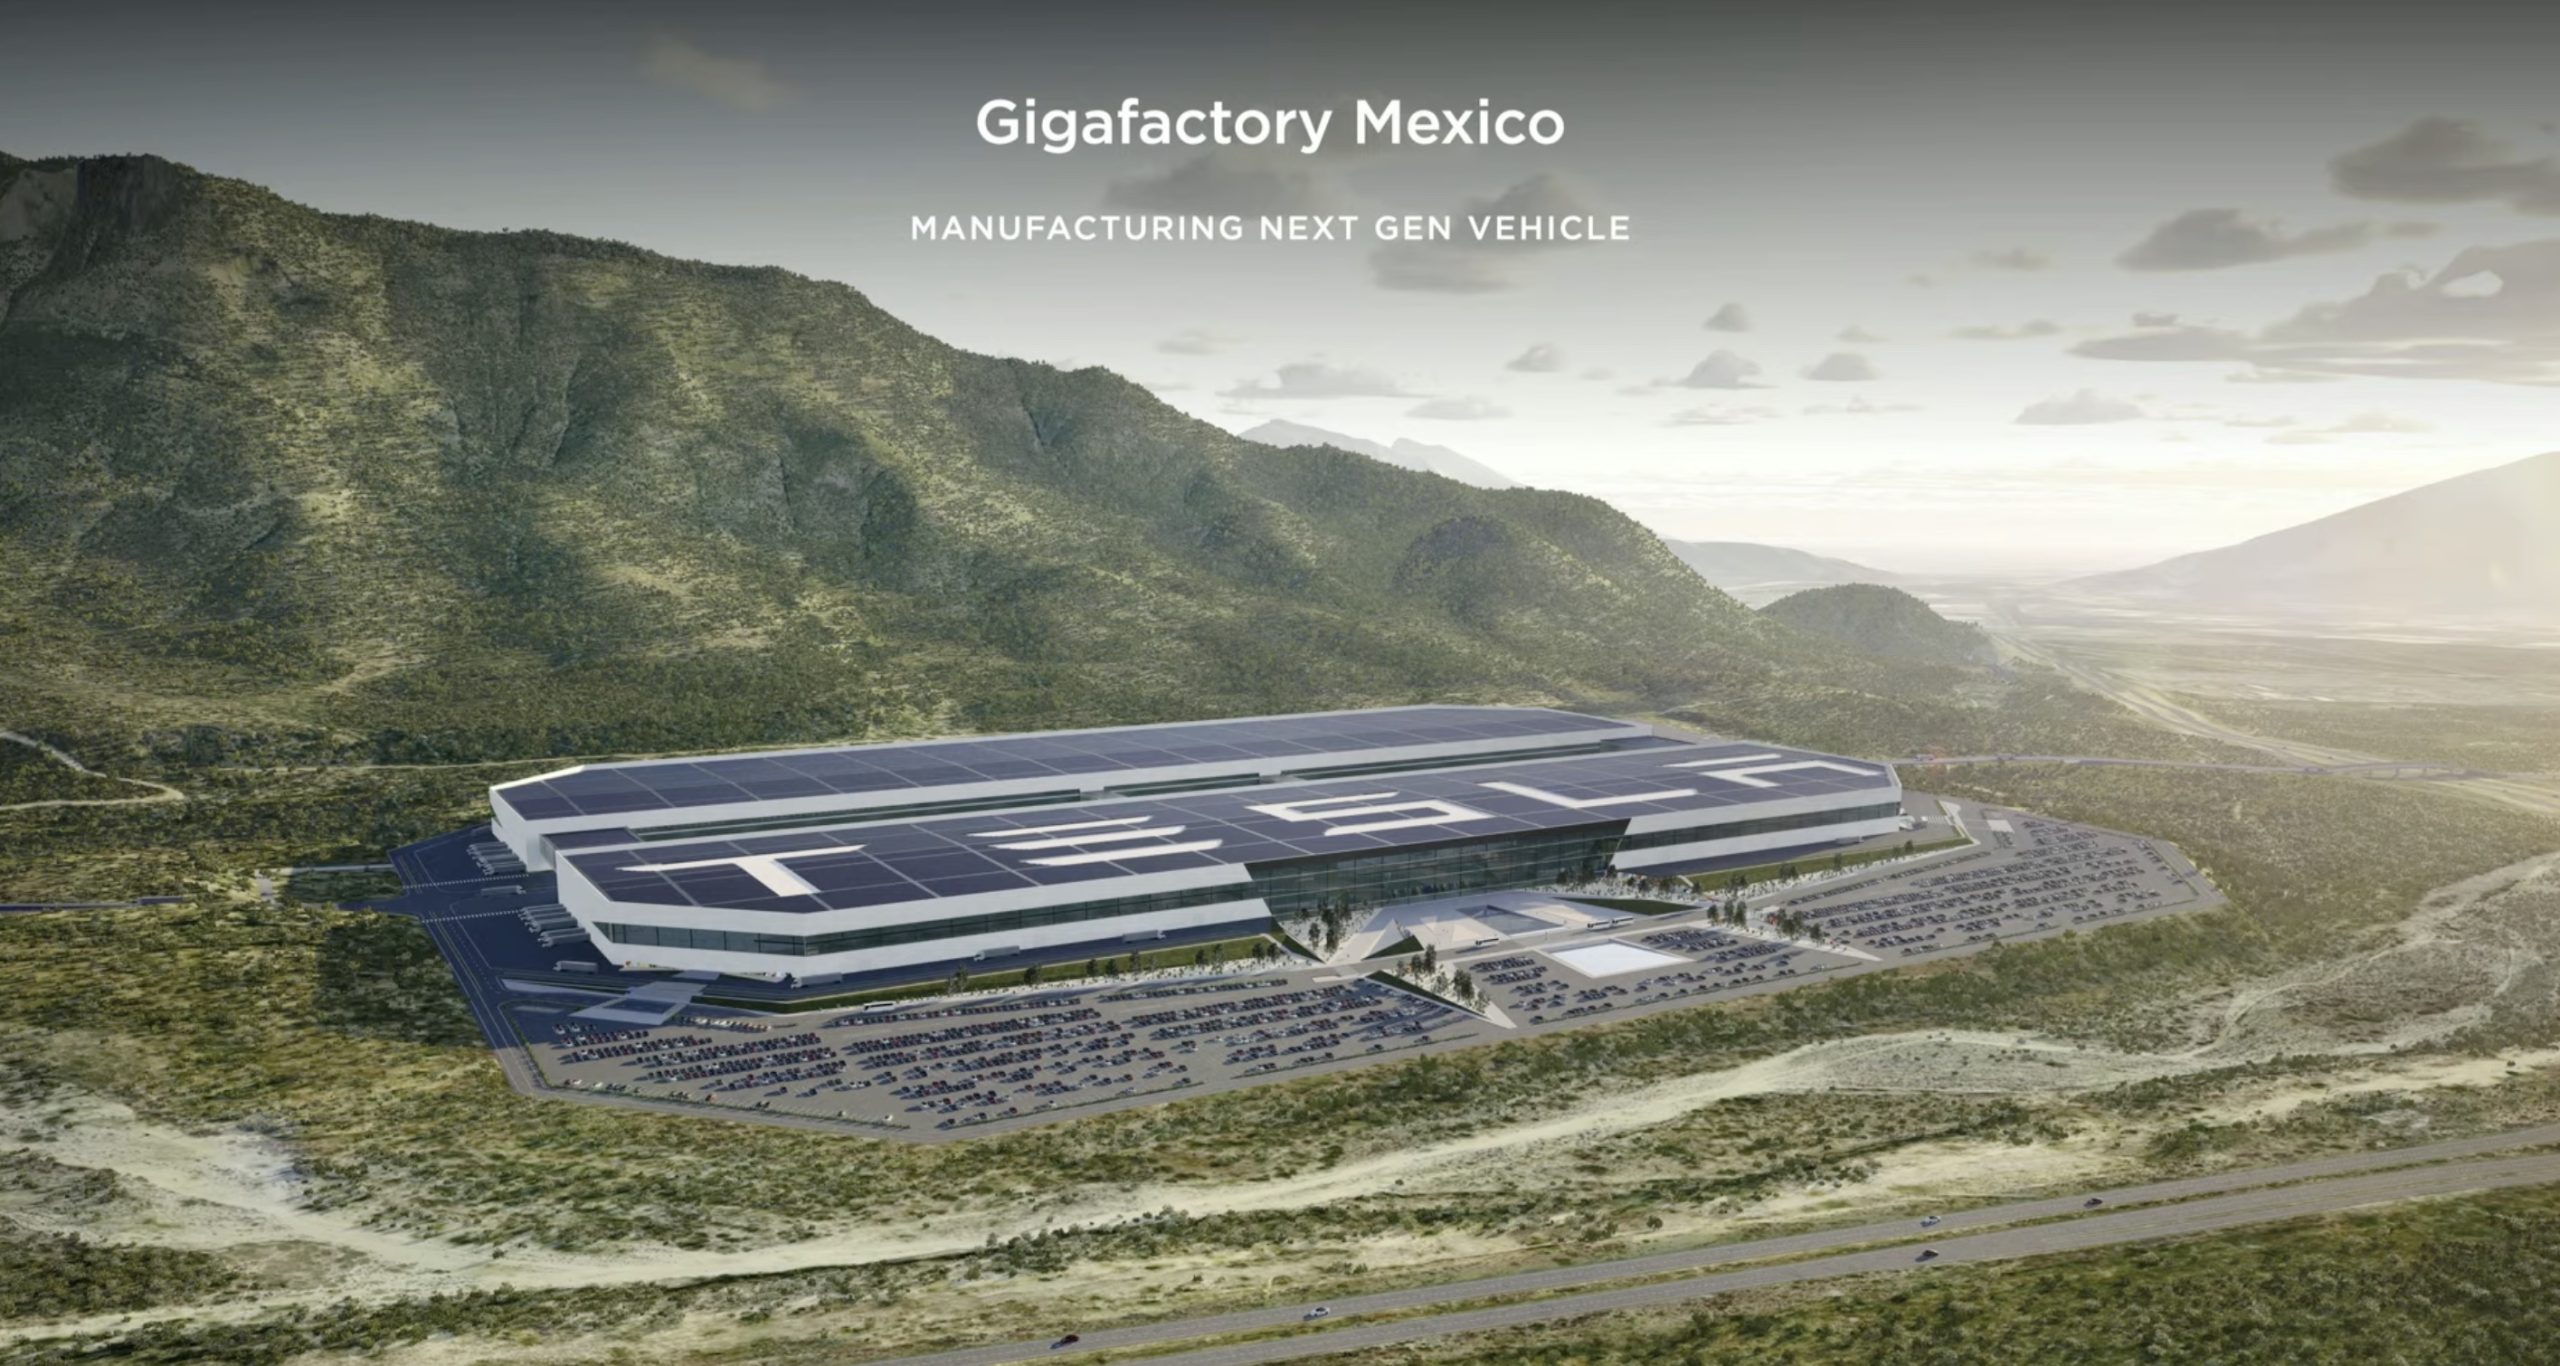 Tesla Gigafactory Mexico will build the company’s next-gen vehicle